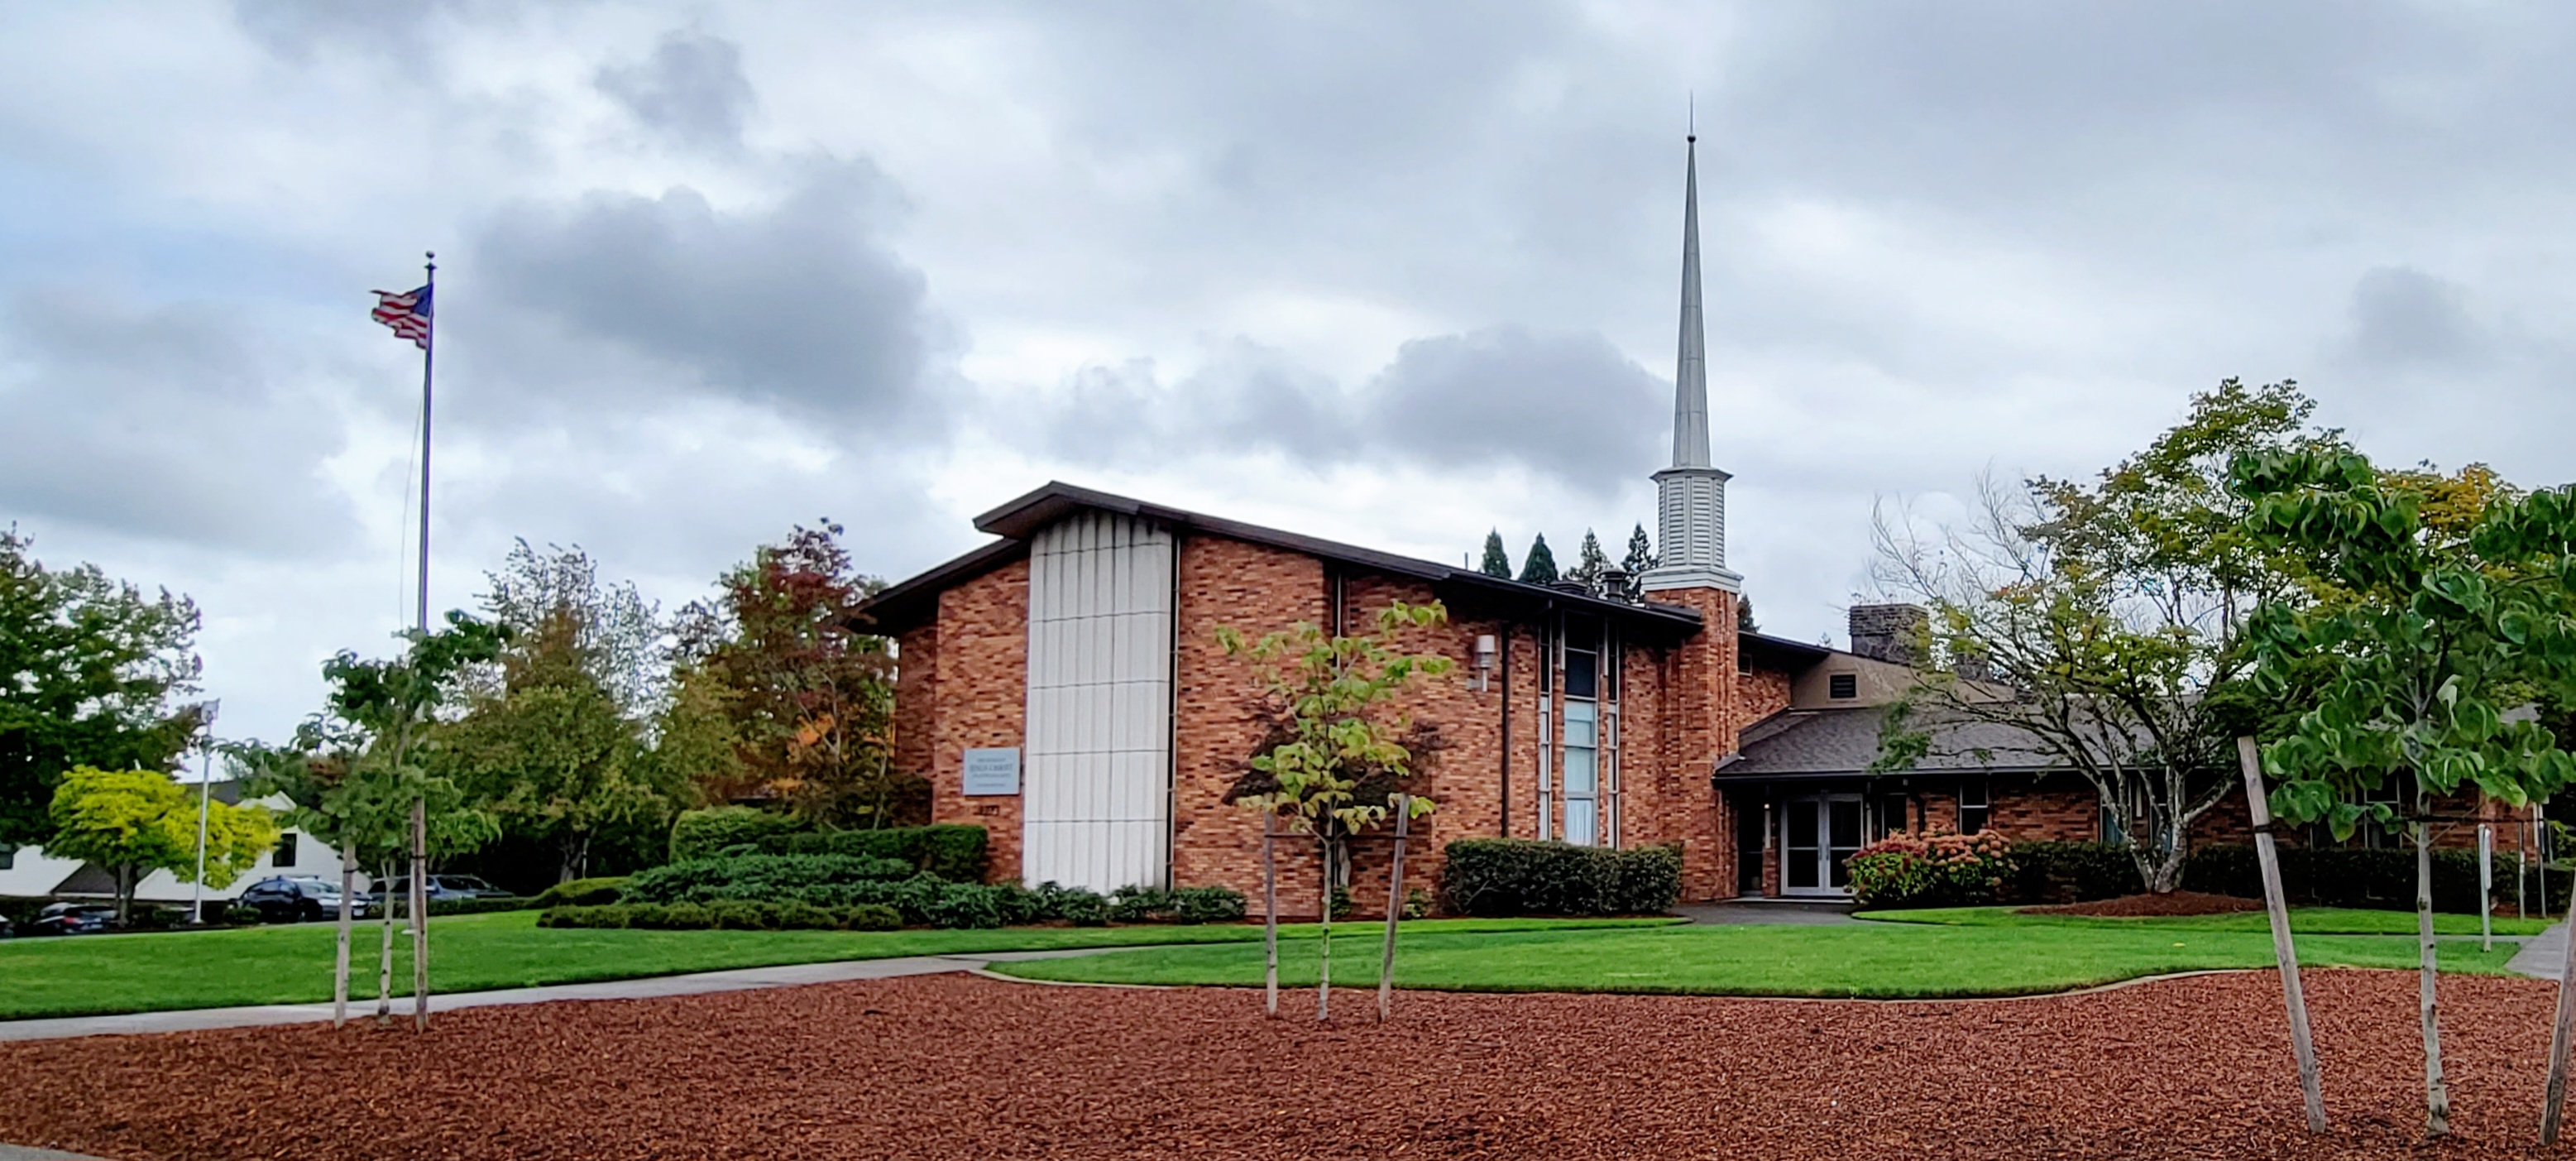 Lakeridge Building of The Church of Jesus Christ of Latter-day Saints in Lake Oswego, Oregon